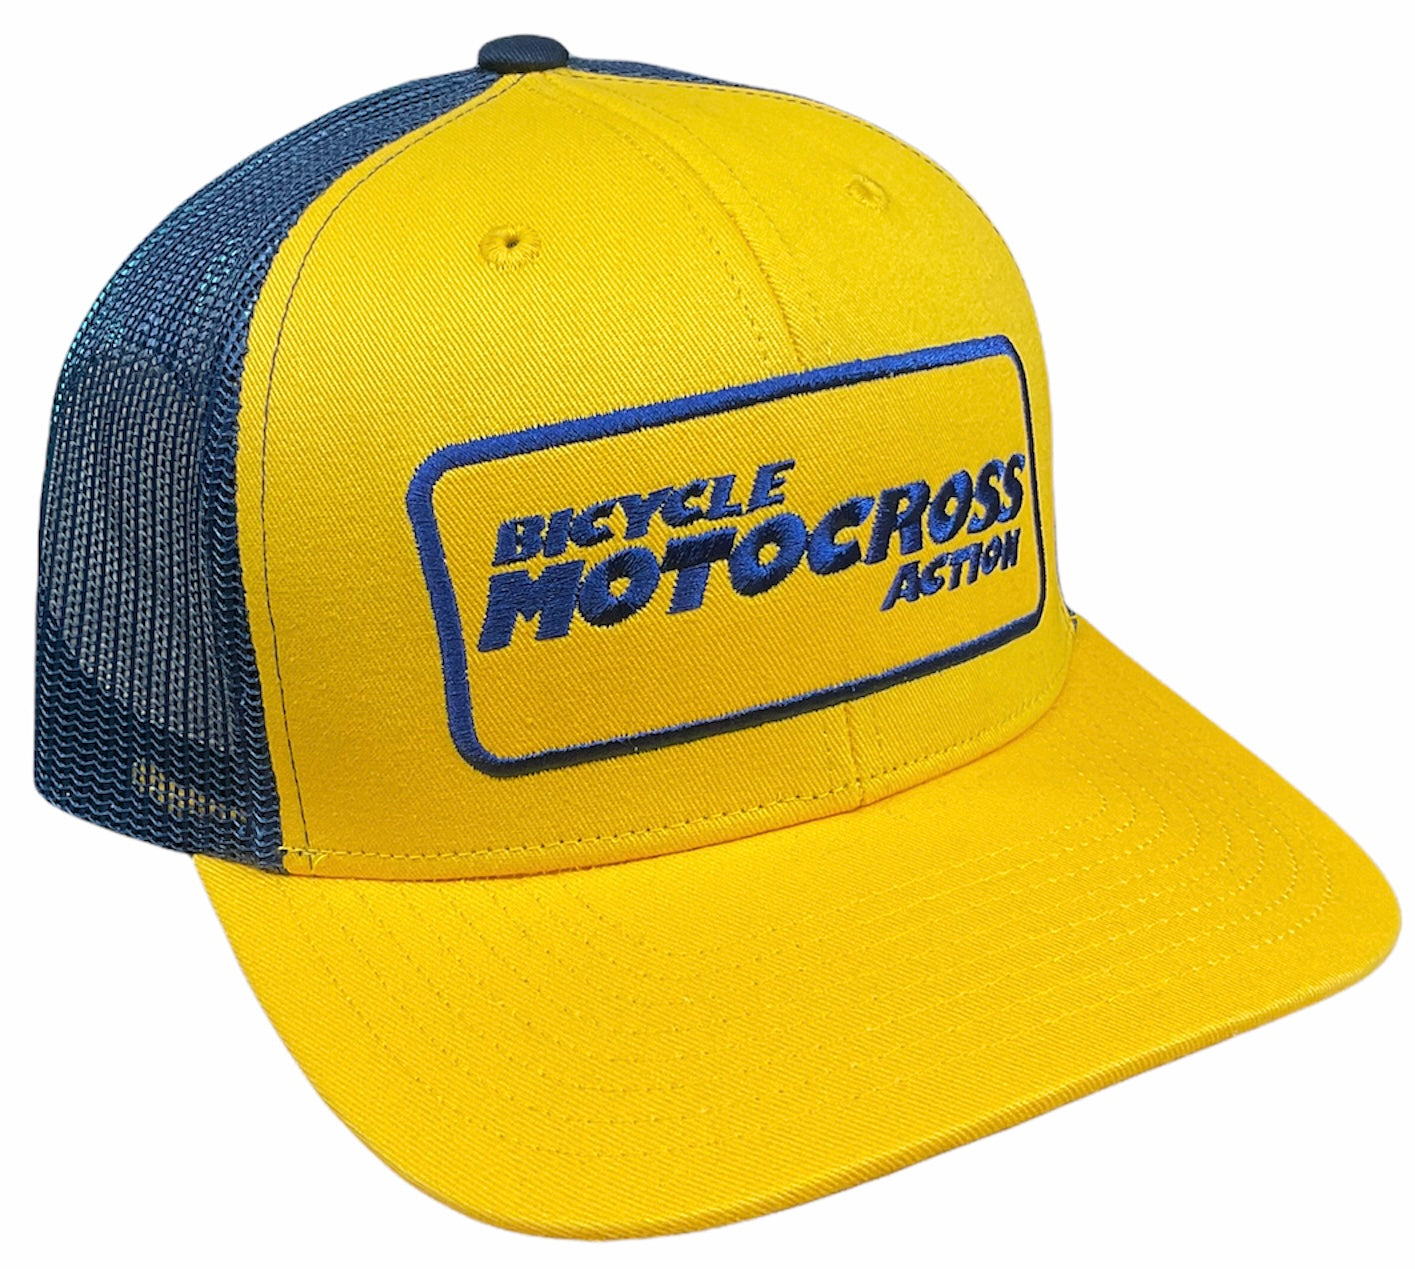 Bicycle Motocross Action Logo Trucker Hat